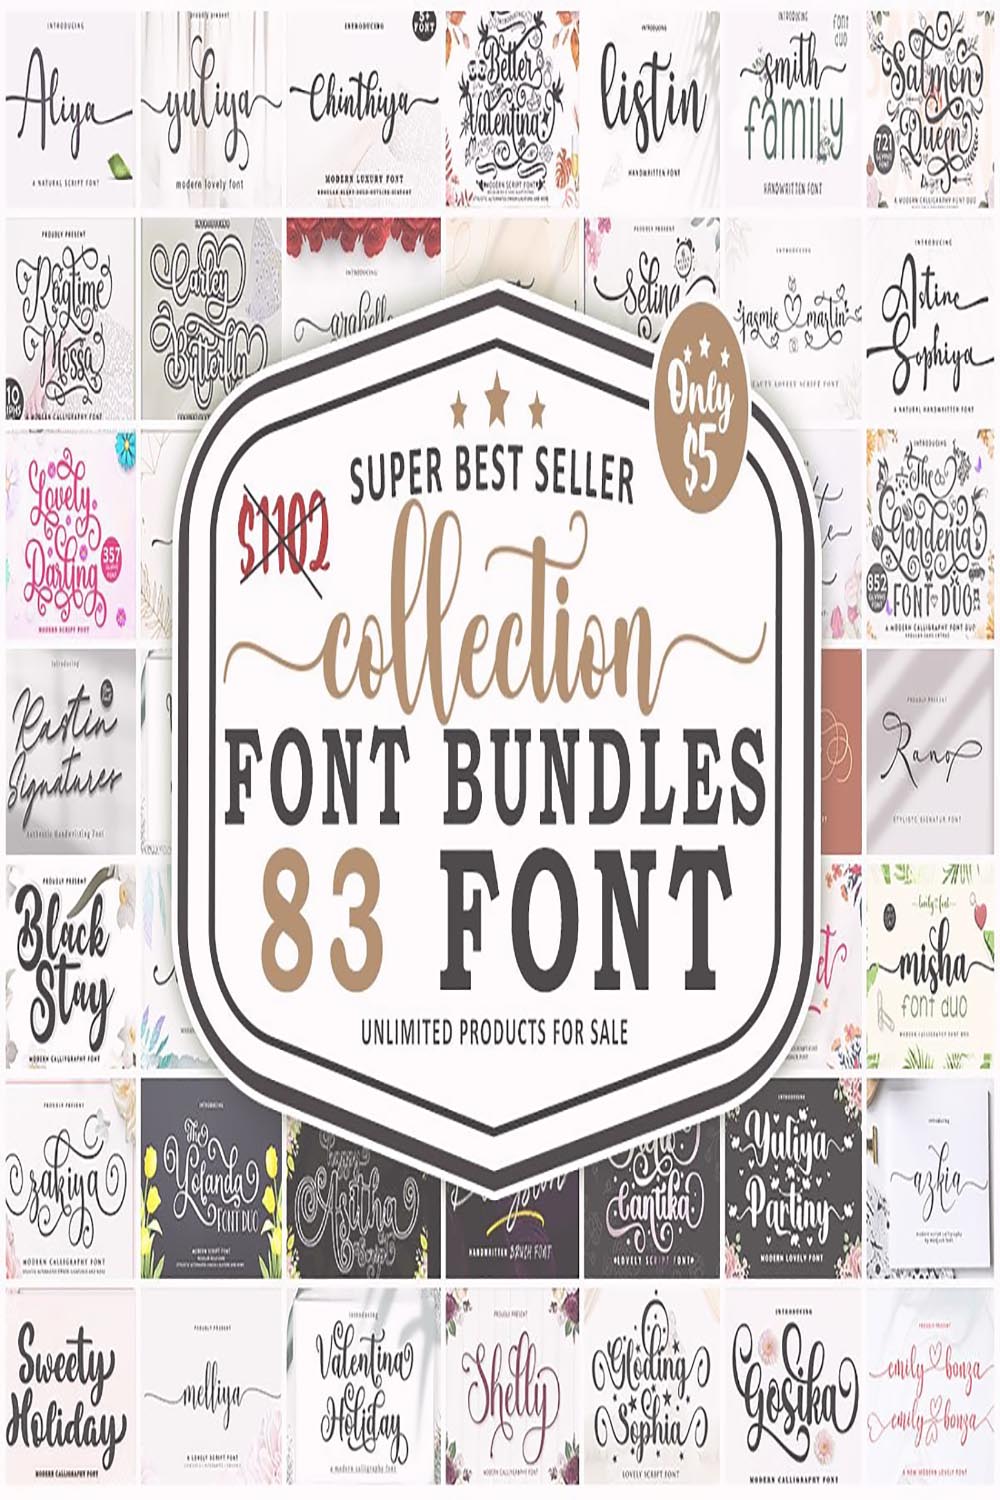 Super Best Seller Collection Font Bundle pinterest preview image.